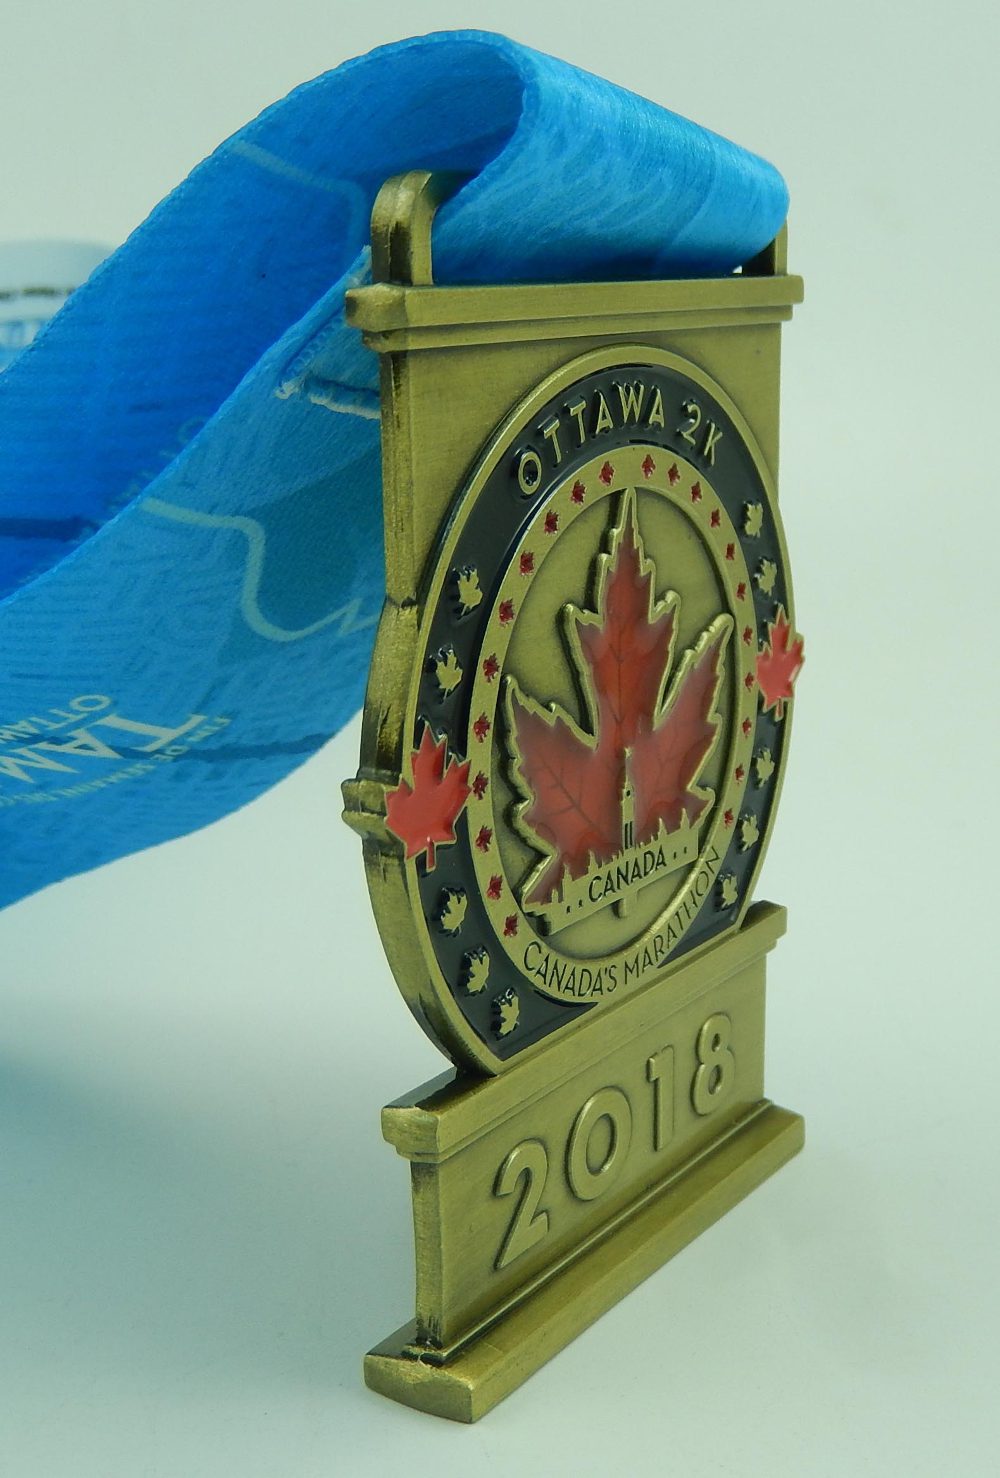 Ottawa Marathon Medal